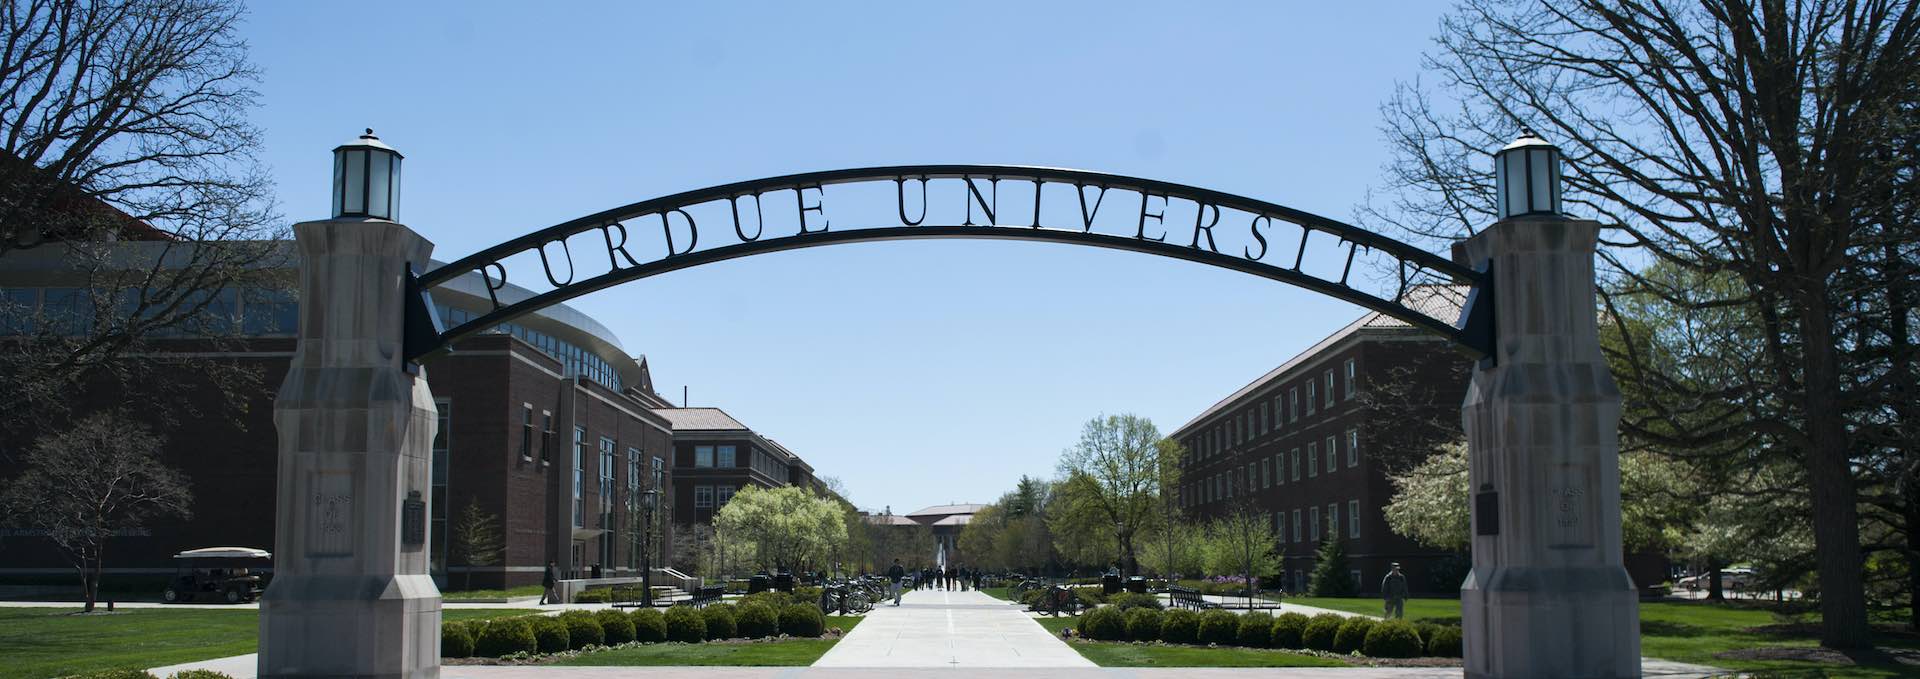 Purdue University hero banner